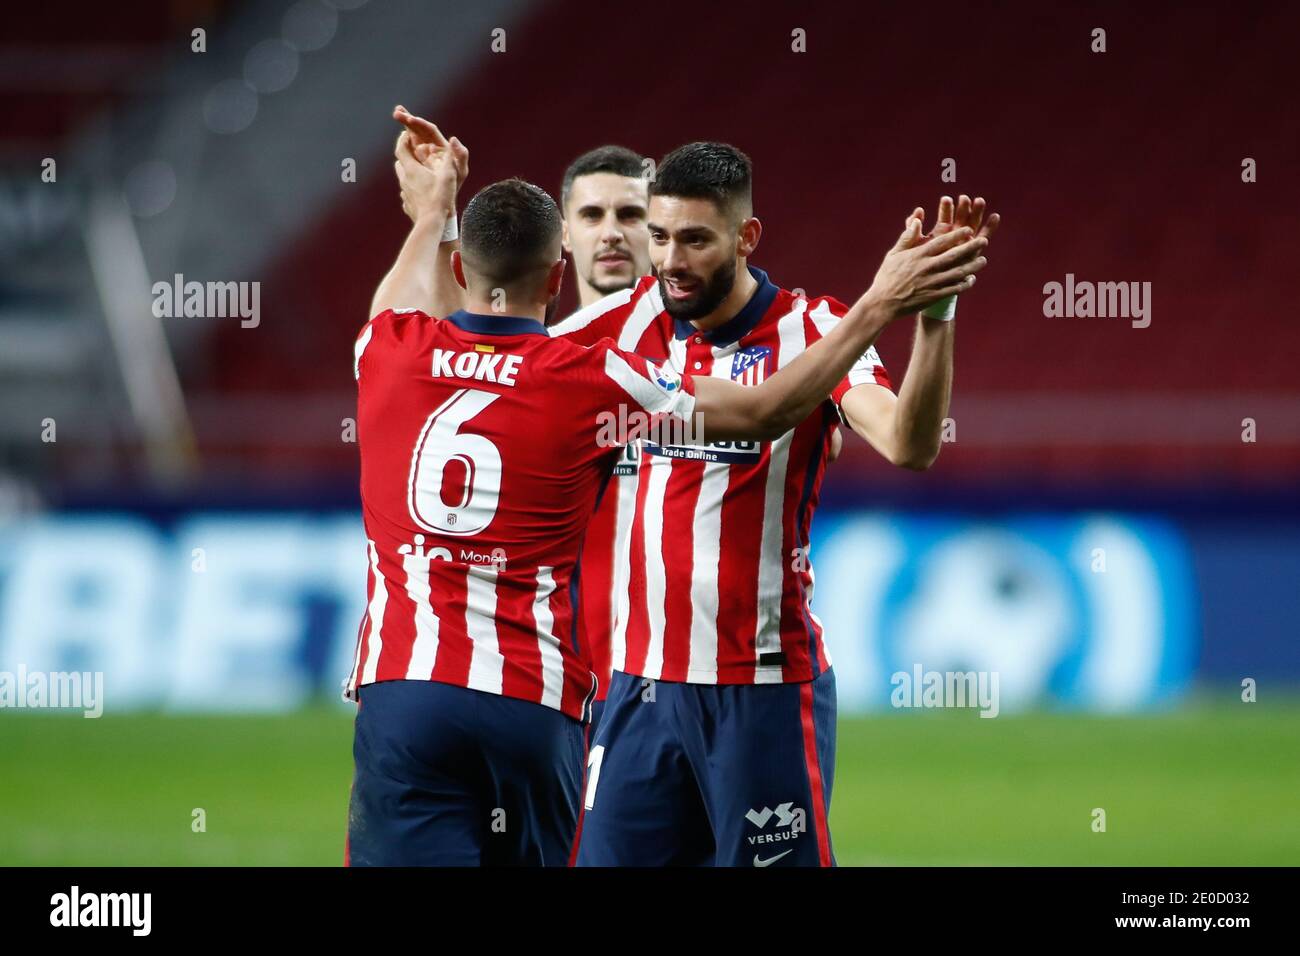 Jorge Resurreccion &quot;Koke&quot; and Yannick Carrasco of Atletico de Madrid celebrate the victory during the Spanish champio / LM Stock Photo